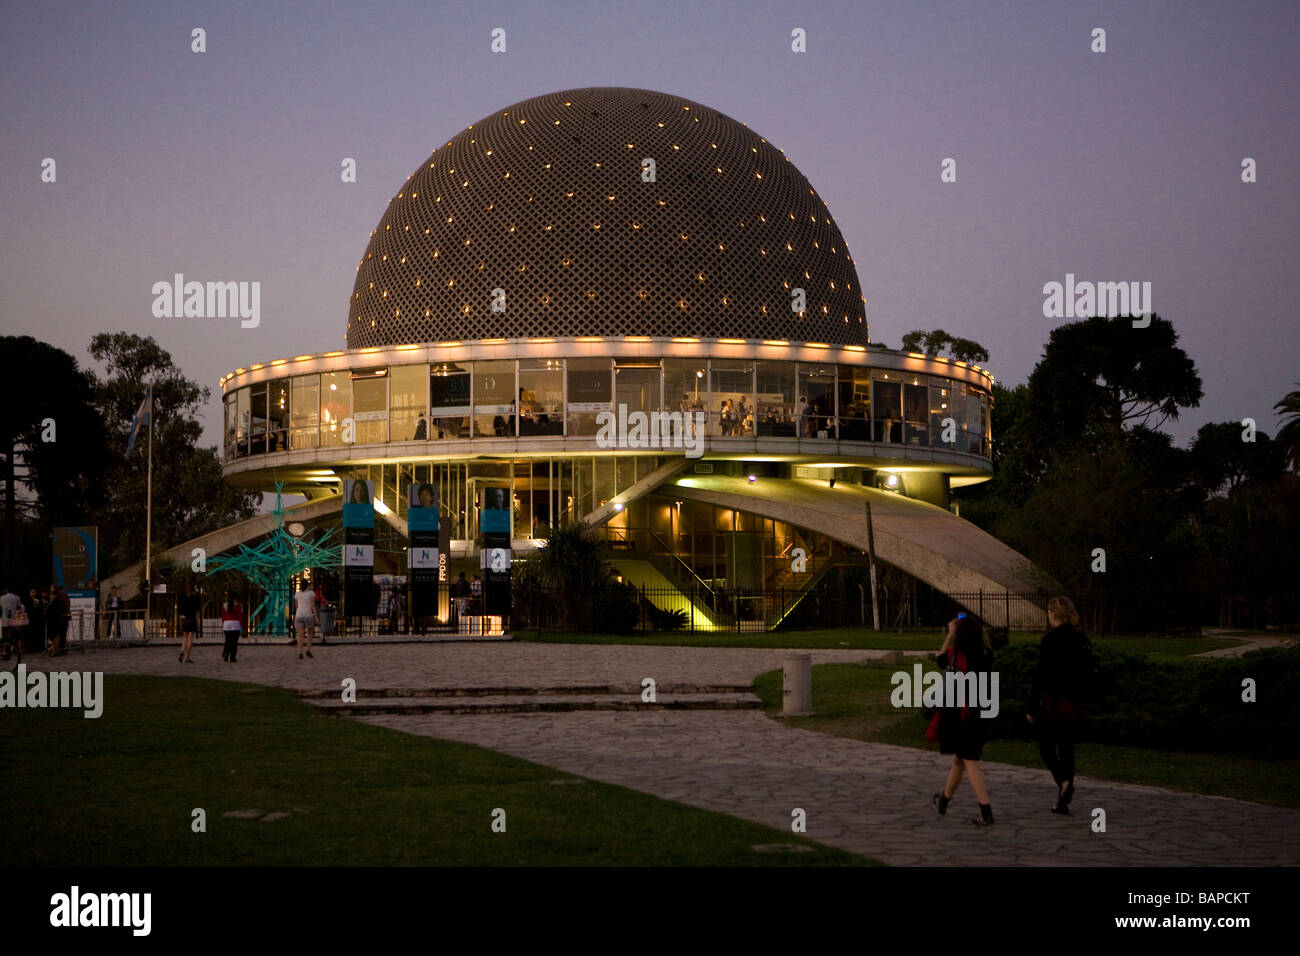 Buenos Aires Galileo Galilei Planetarium in Palermo where a Puro Diseño design fair is taking place. Stock Photo